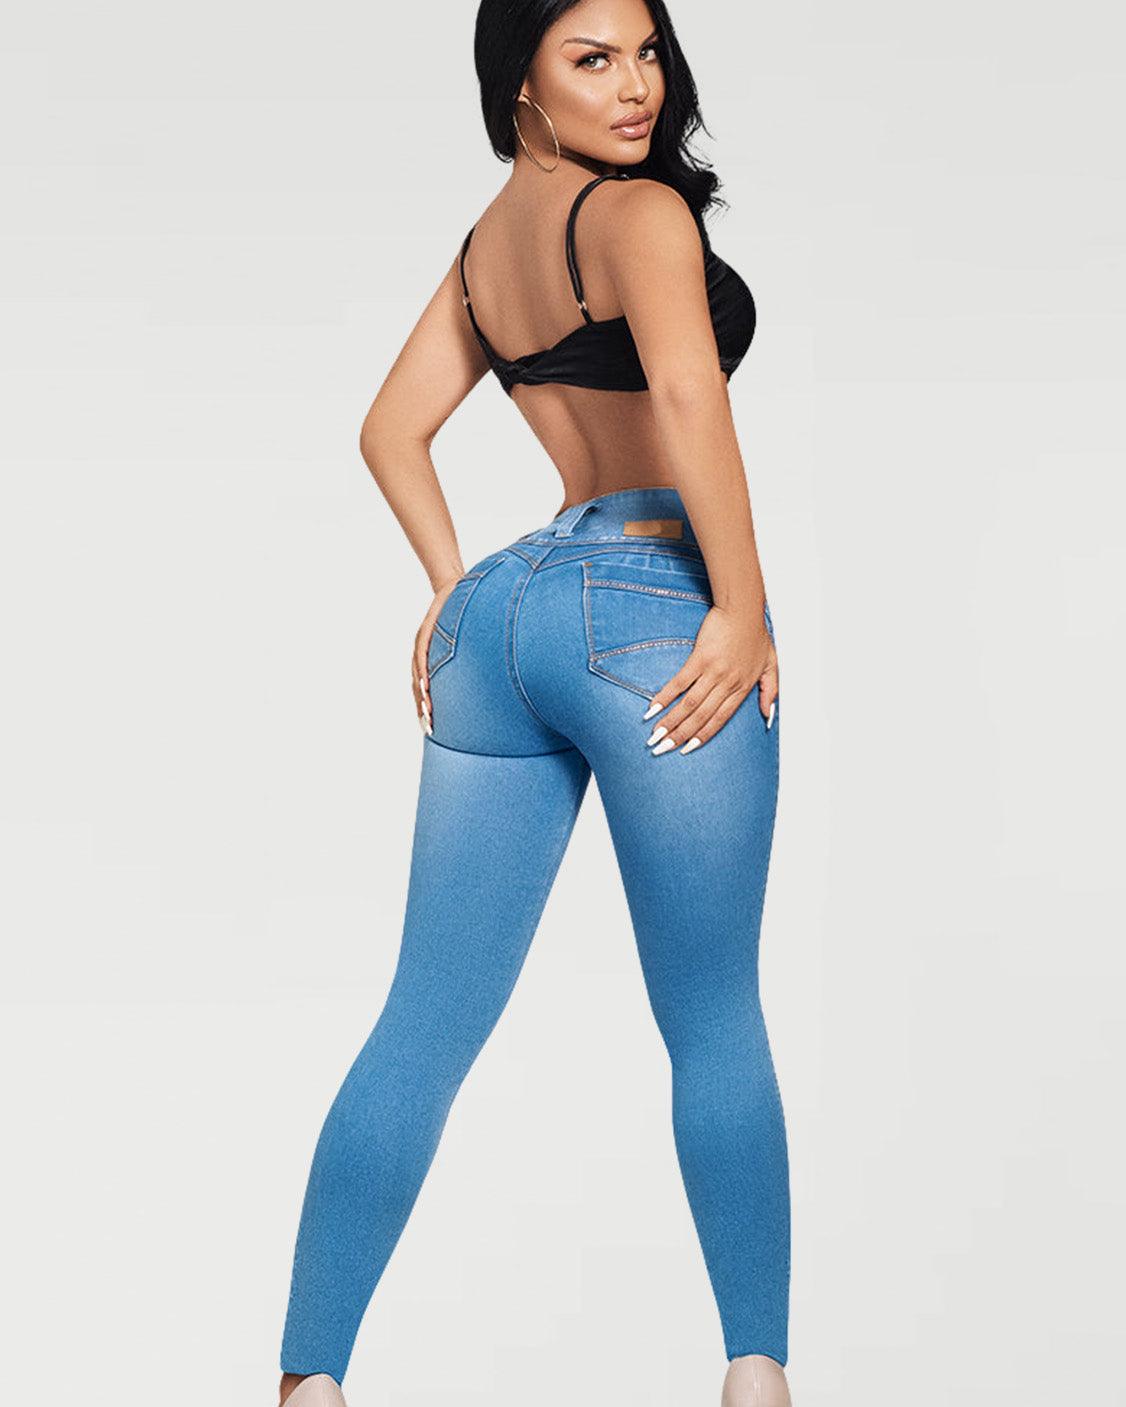 Butt Lift Jeans Shape Your Body - Wishe